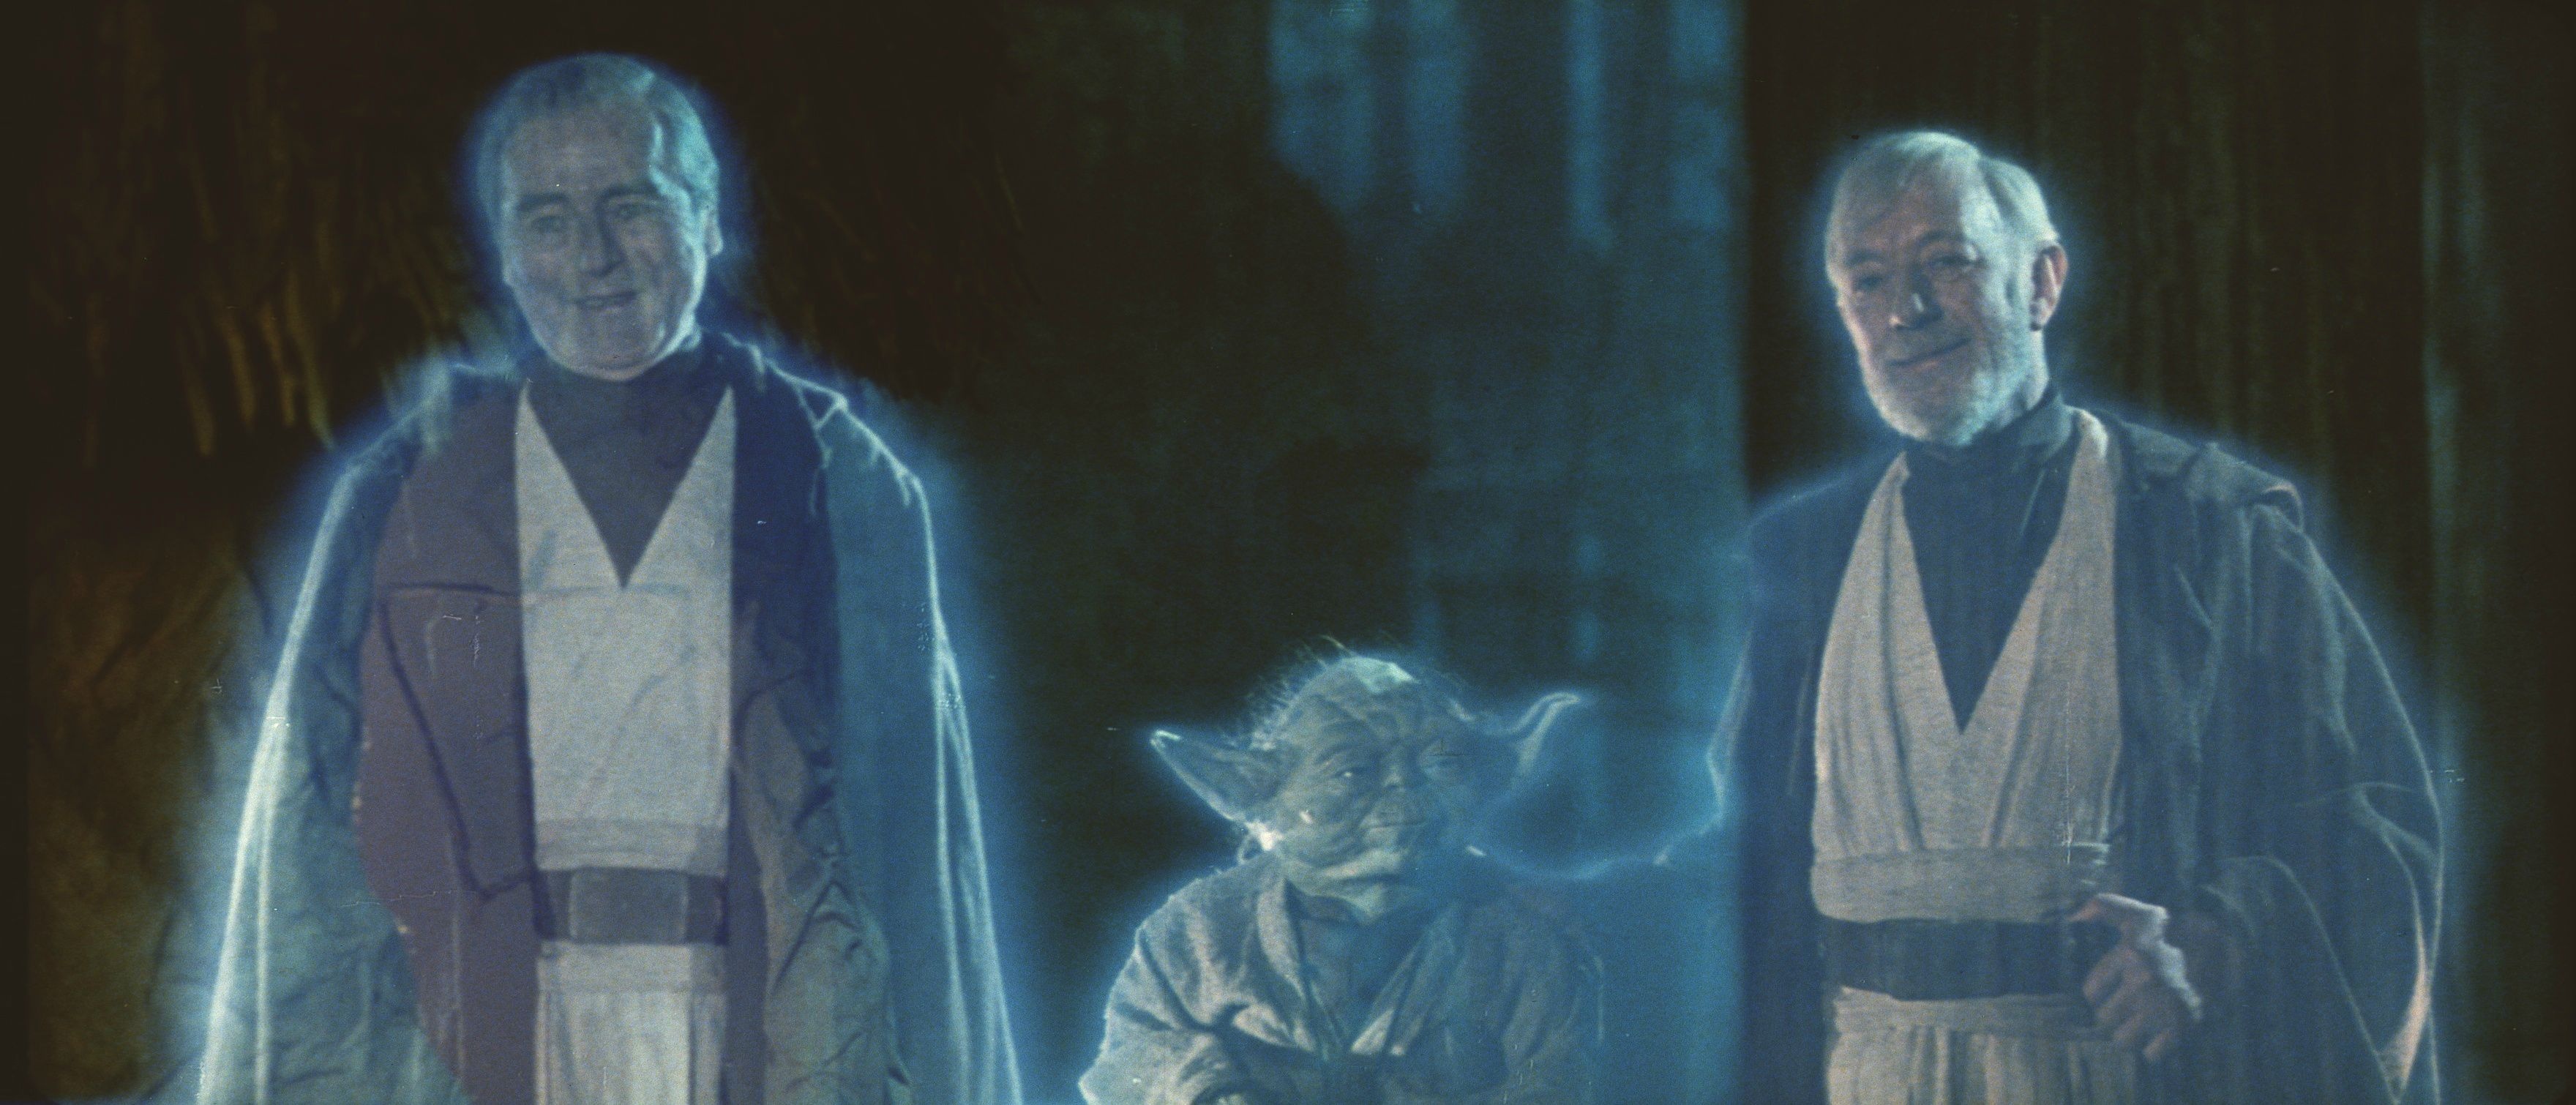 Return of the Jedi, Yoda and Anakin, Spiritual journey, Star Wars wallpaper, 3520x1510 Dual Screen Desktop